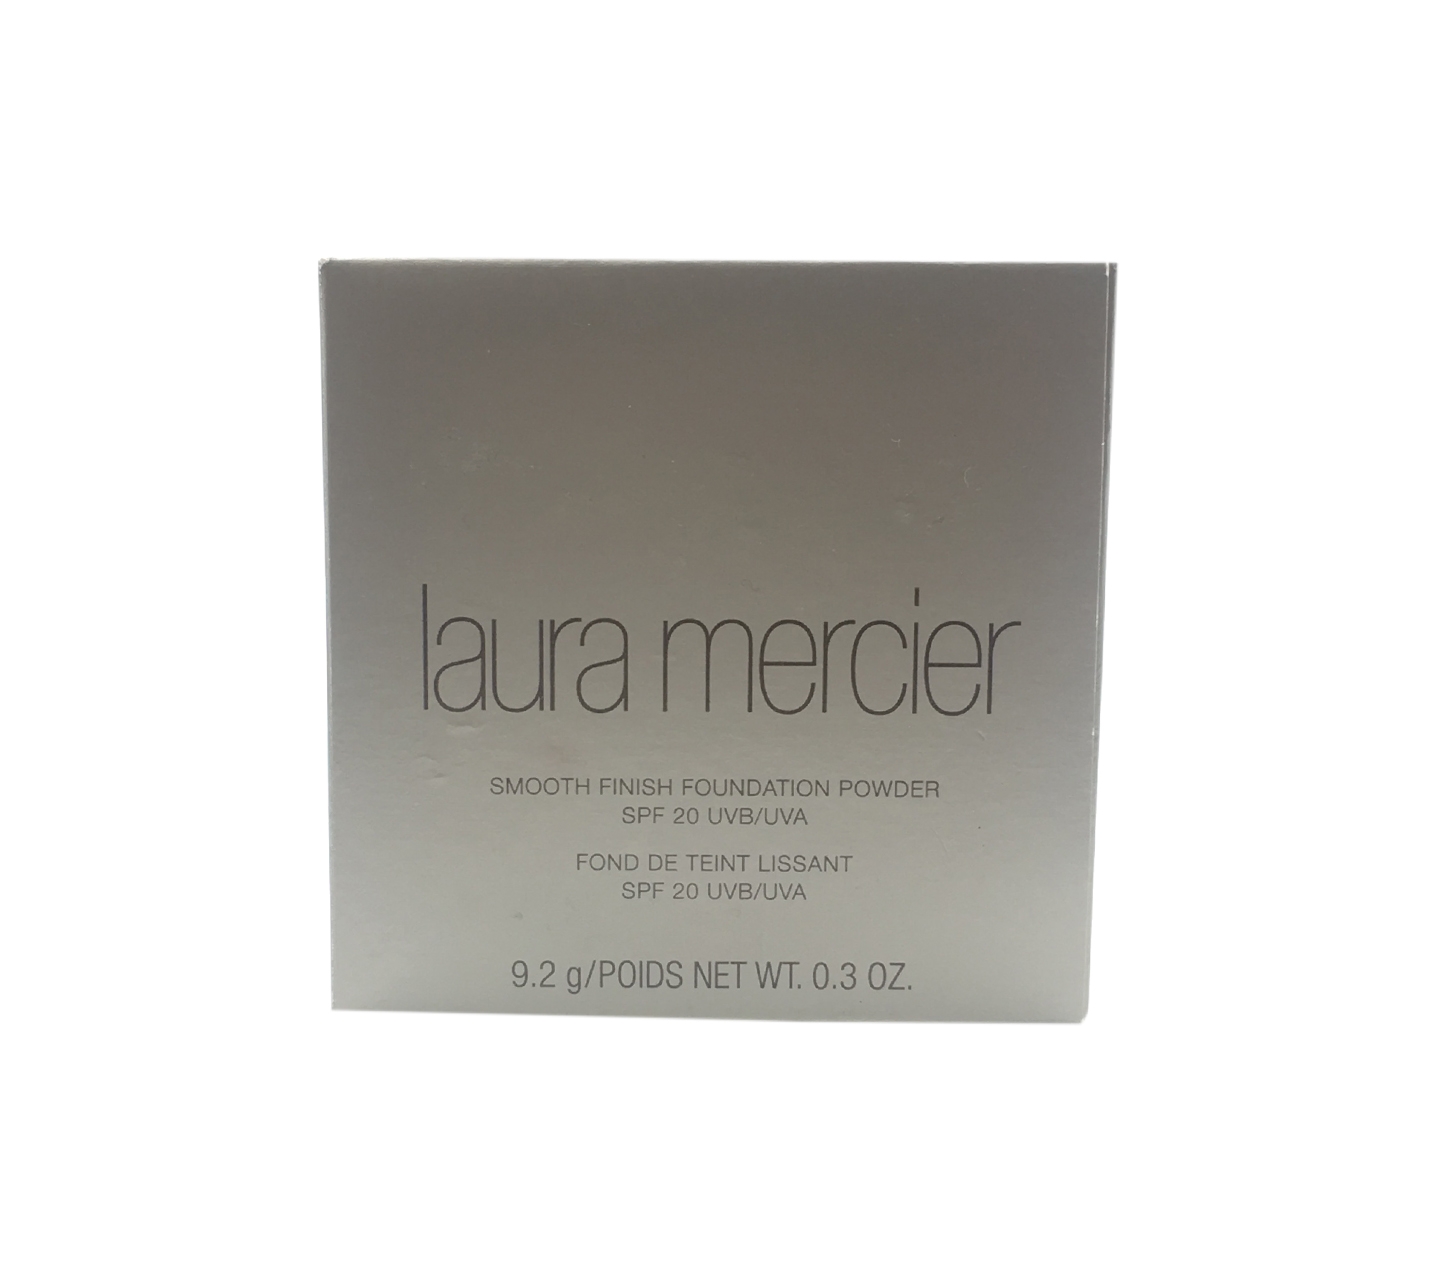 Laura mercier smooth finish foundation powder SPF 20 UVB/UVA